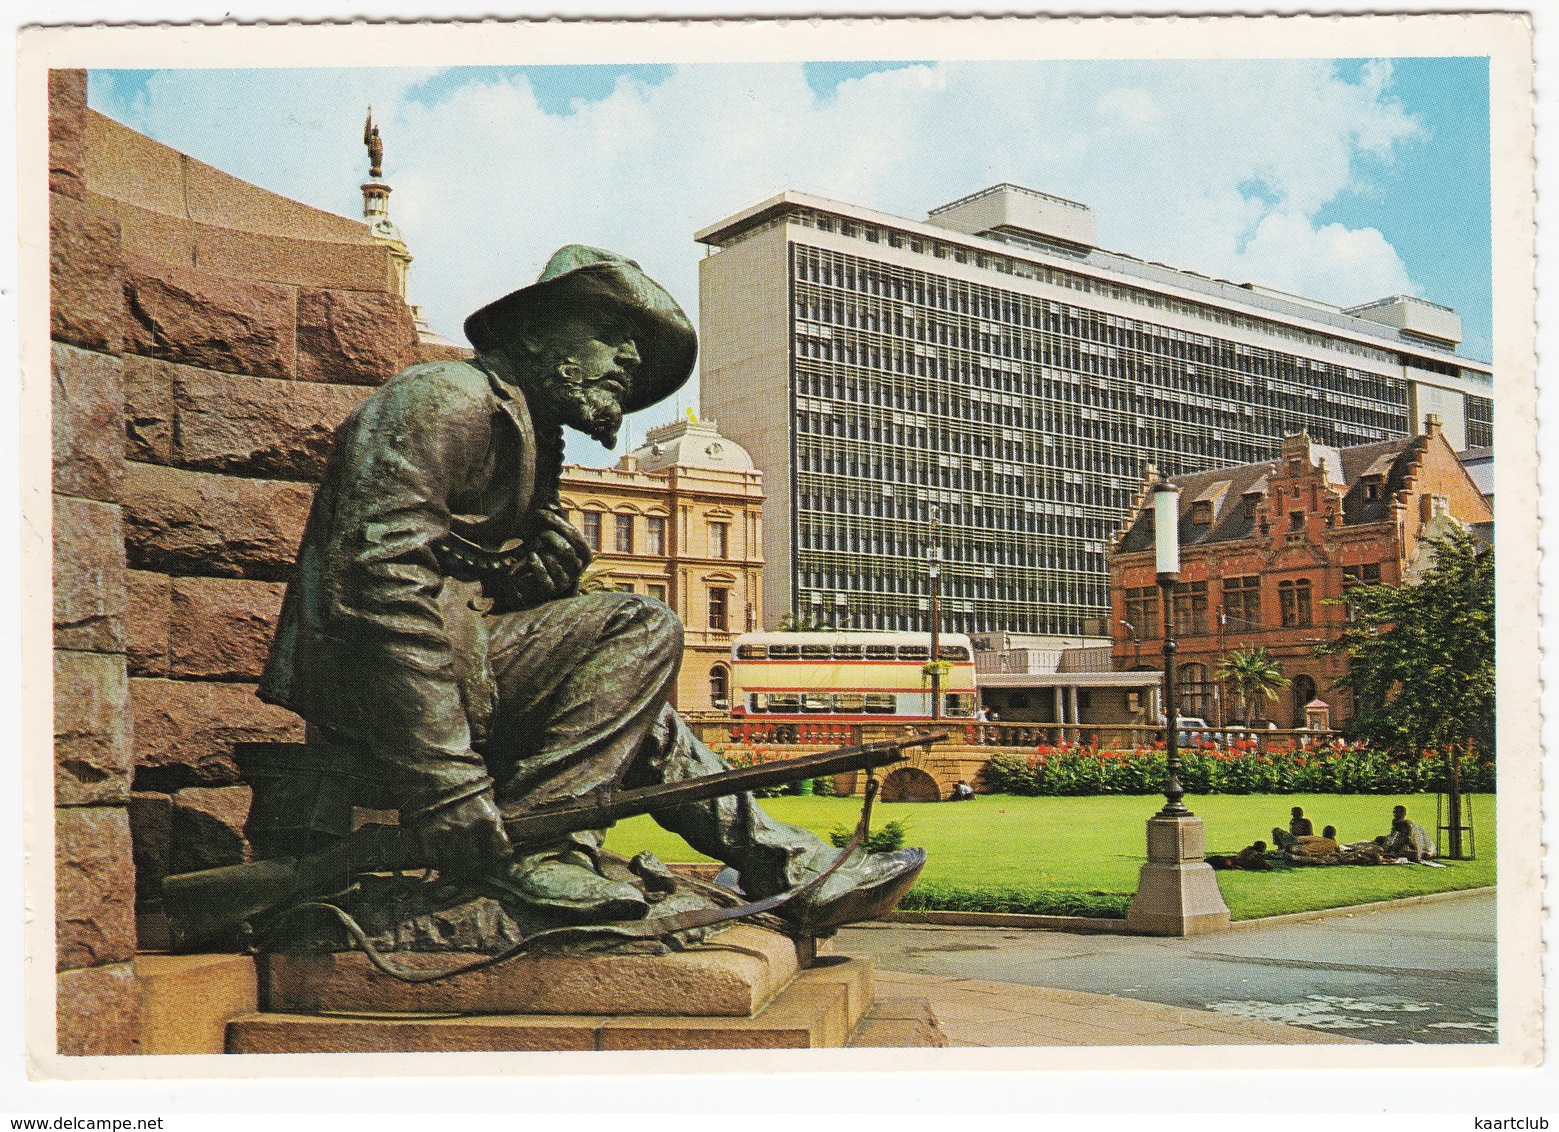 Pretoria: DOUBLE DECK BUS - Church Square - Paul Kruger Monument (bronze) - (South Africa) - Zuid-Afrika